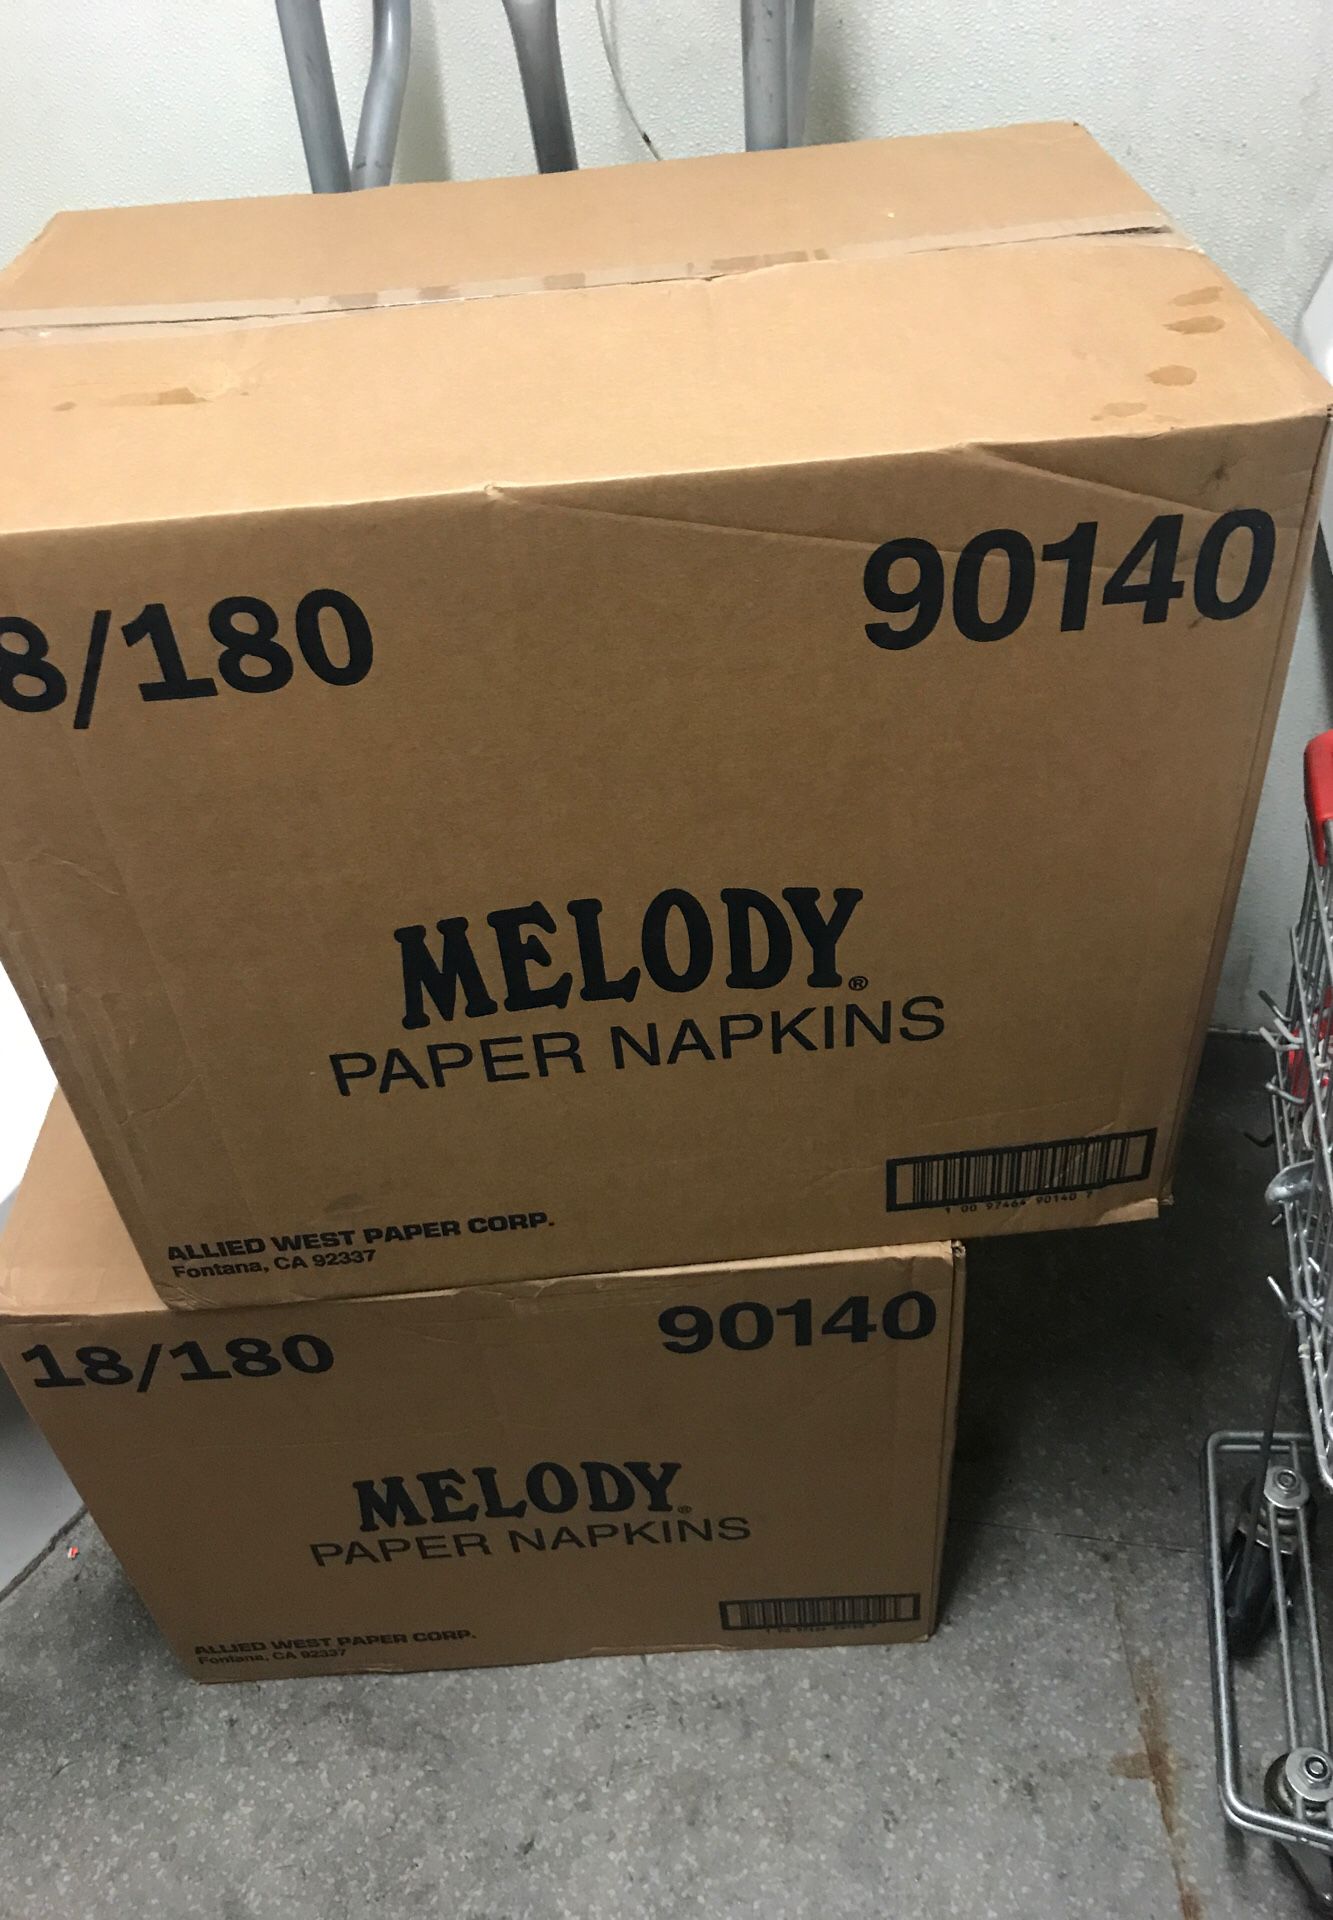 MELODY paper napkins